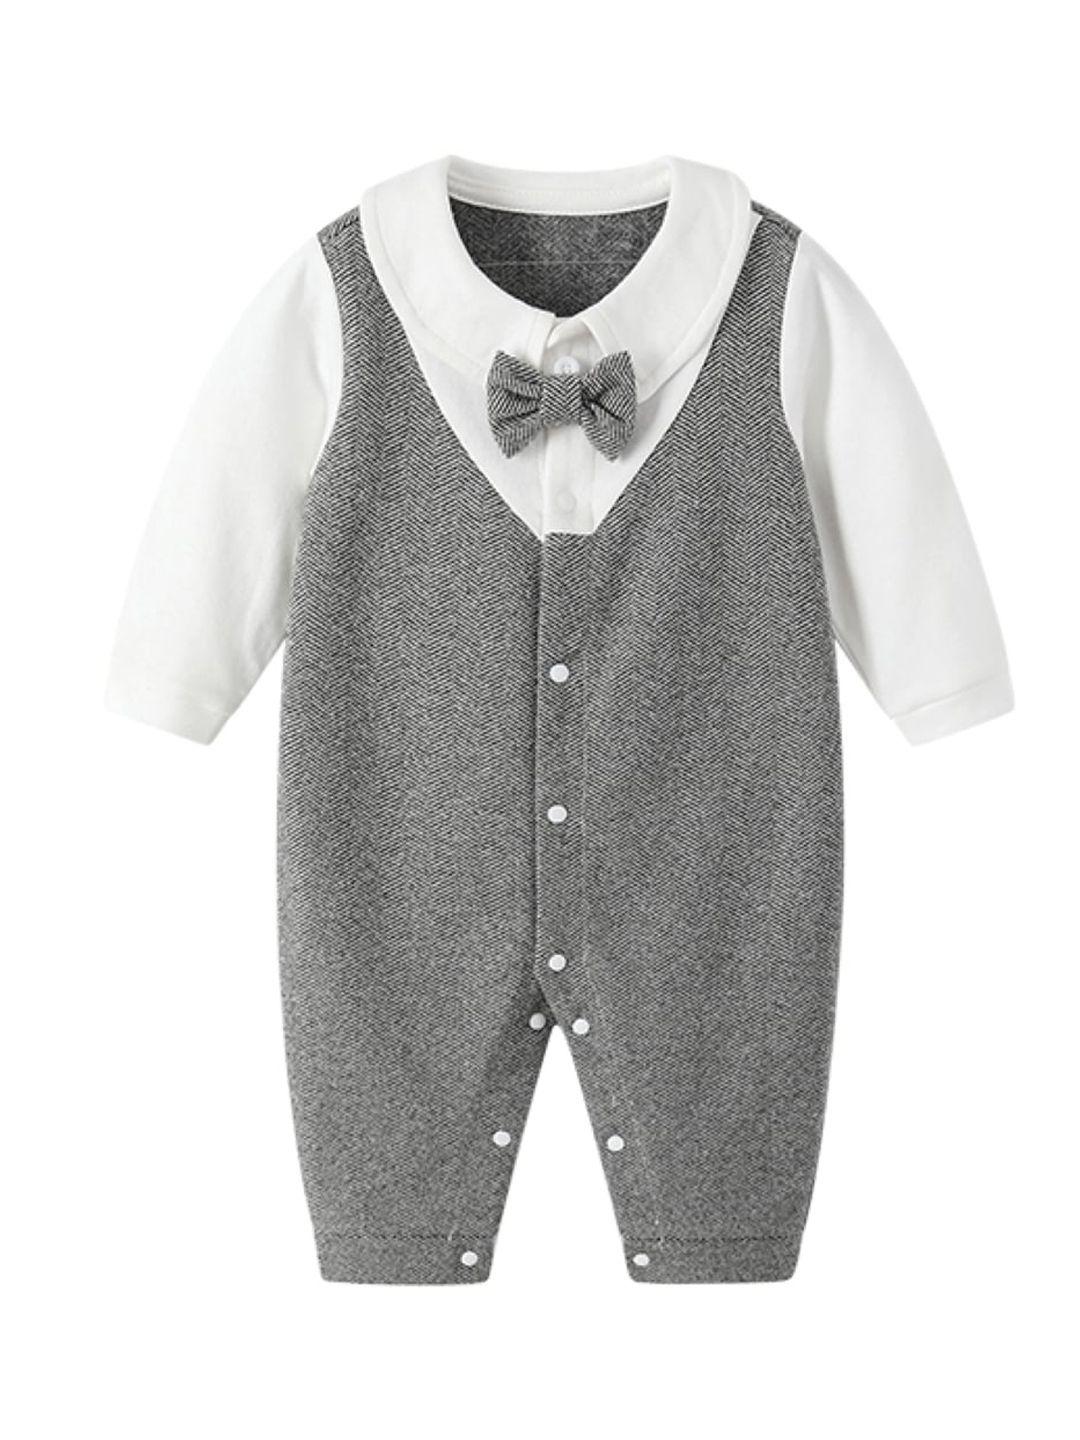 stylecast-infants-grey-shirt-collar-romper